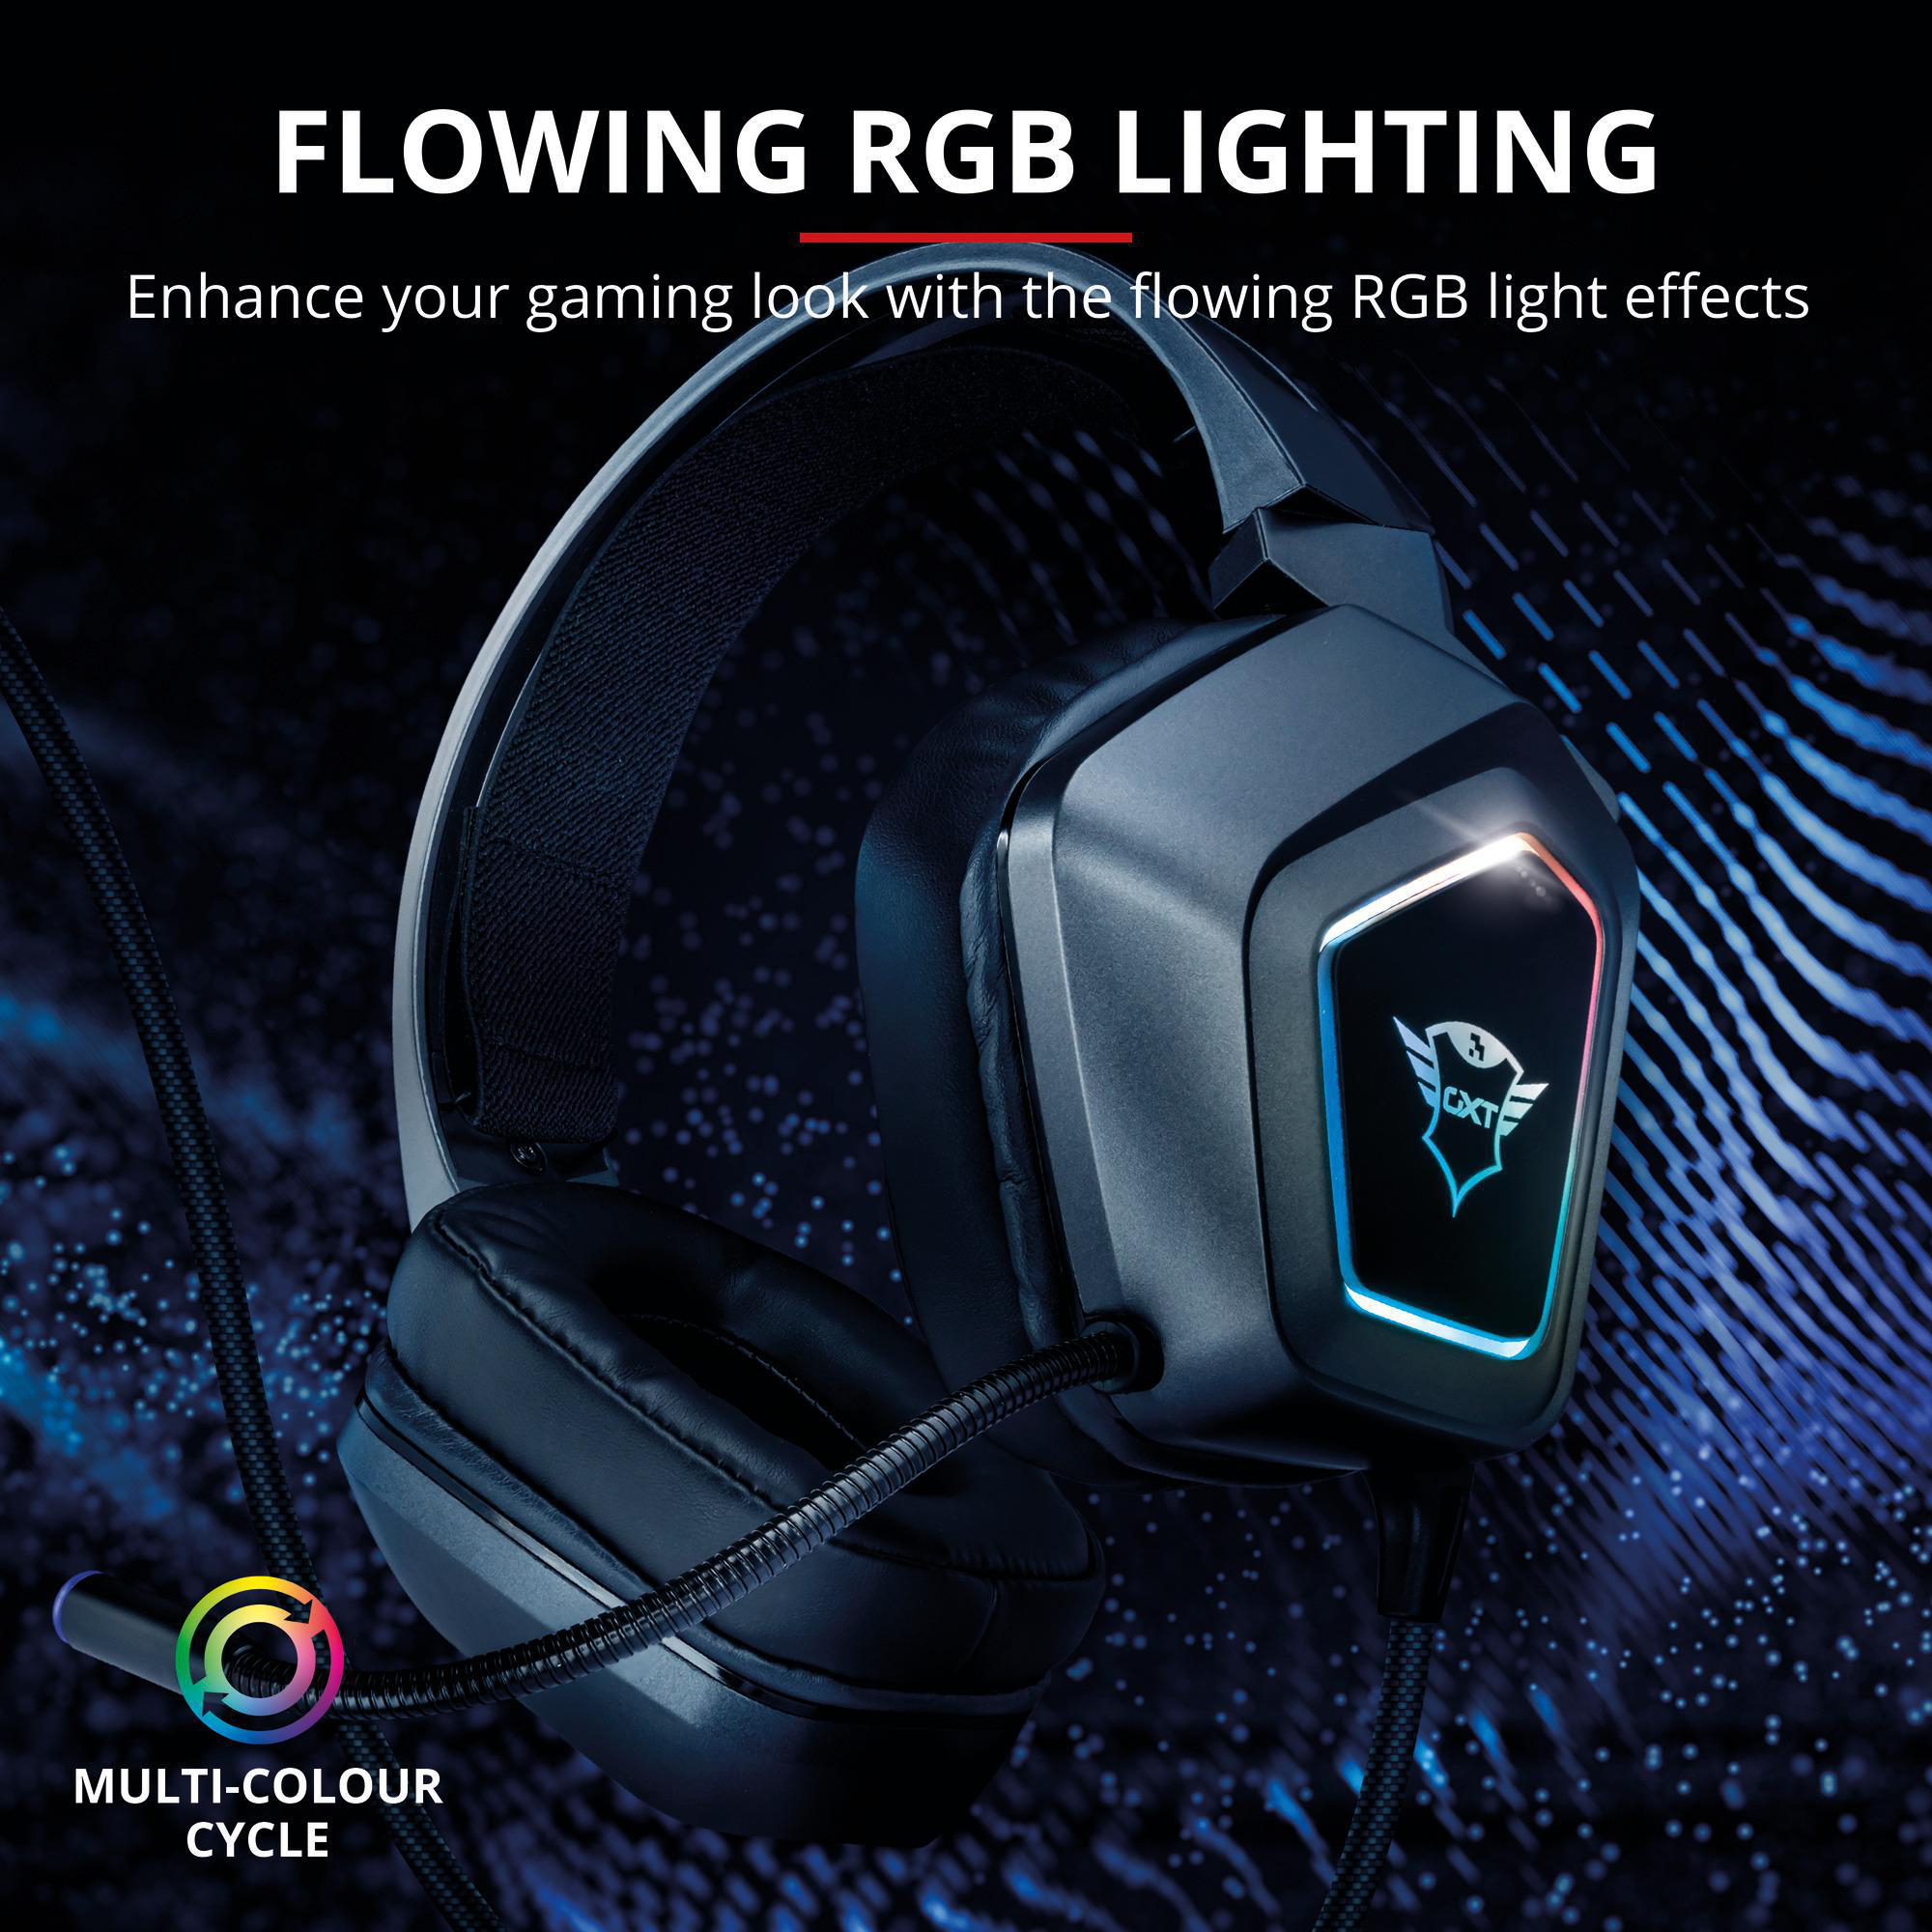 TRUST GXT 7.1 450 Gaming RGB - Schwarz Over-ear Surround Sound Headset Blizz